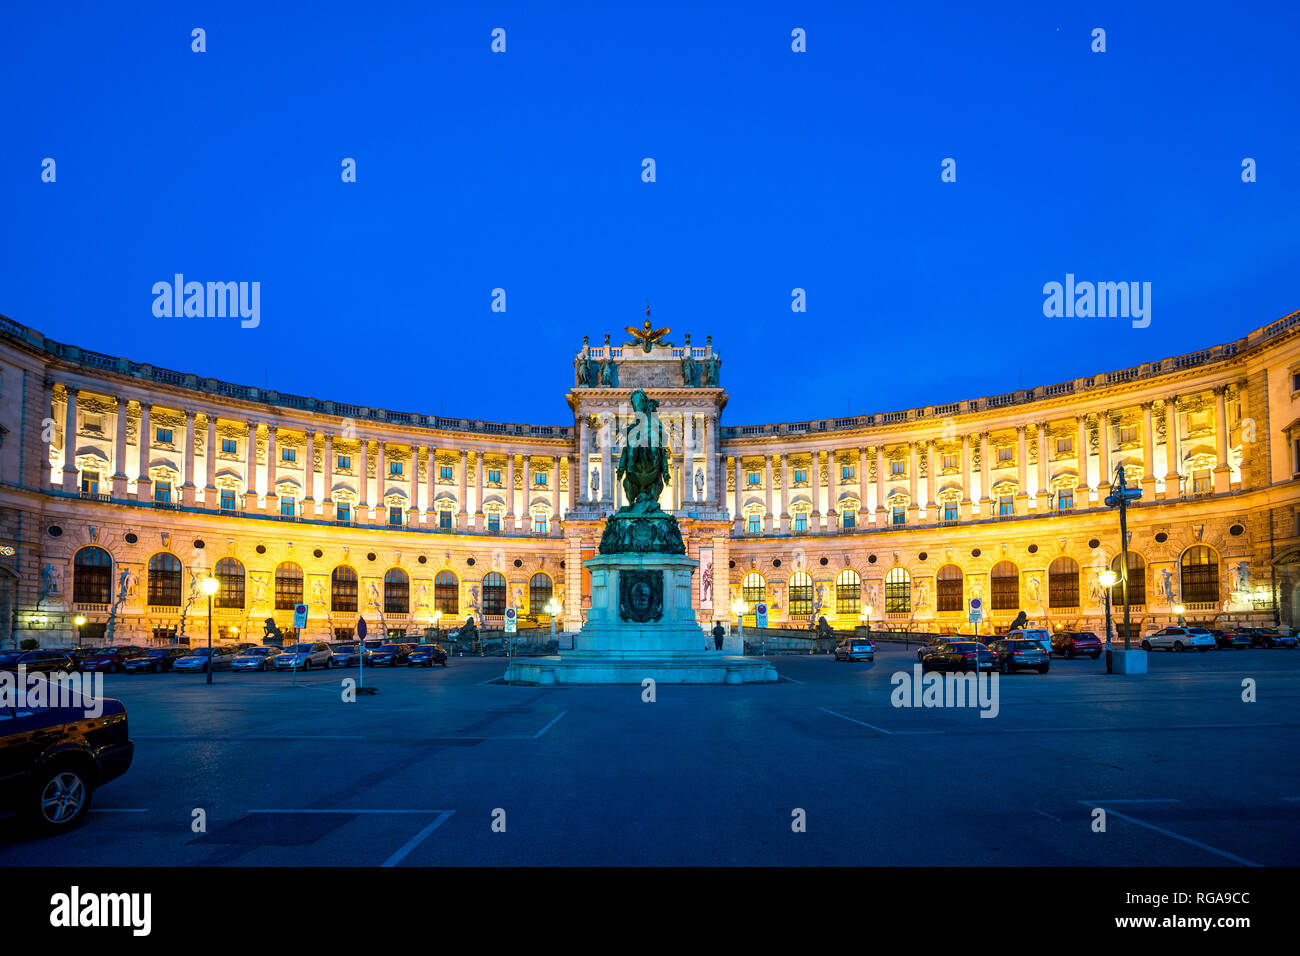 Austria, Viena, Biblioteca Nacional, hora azul Foto de stock